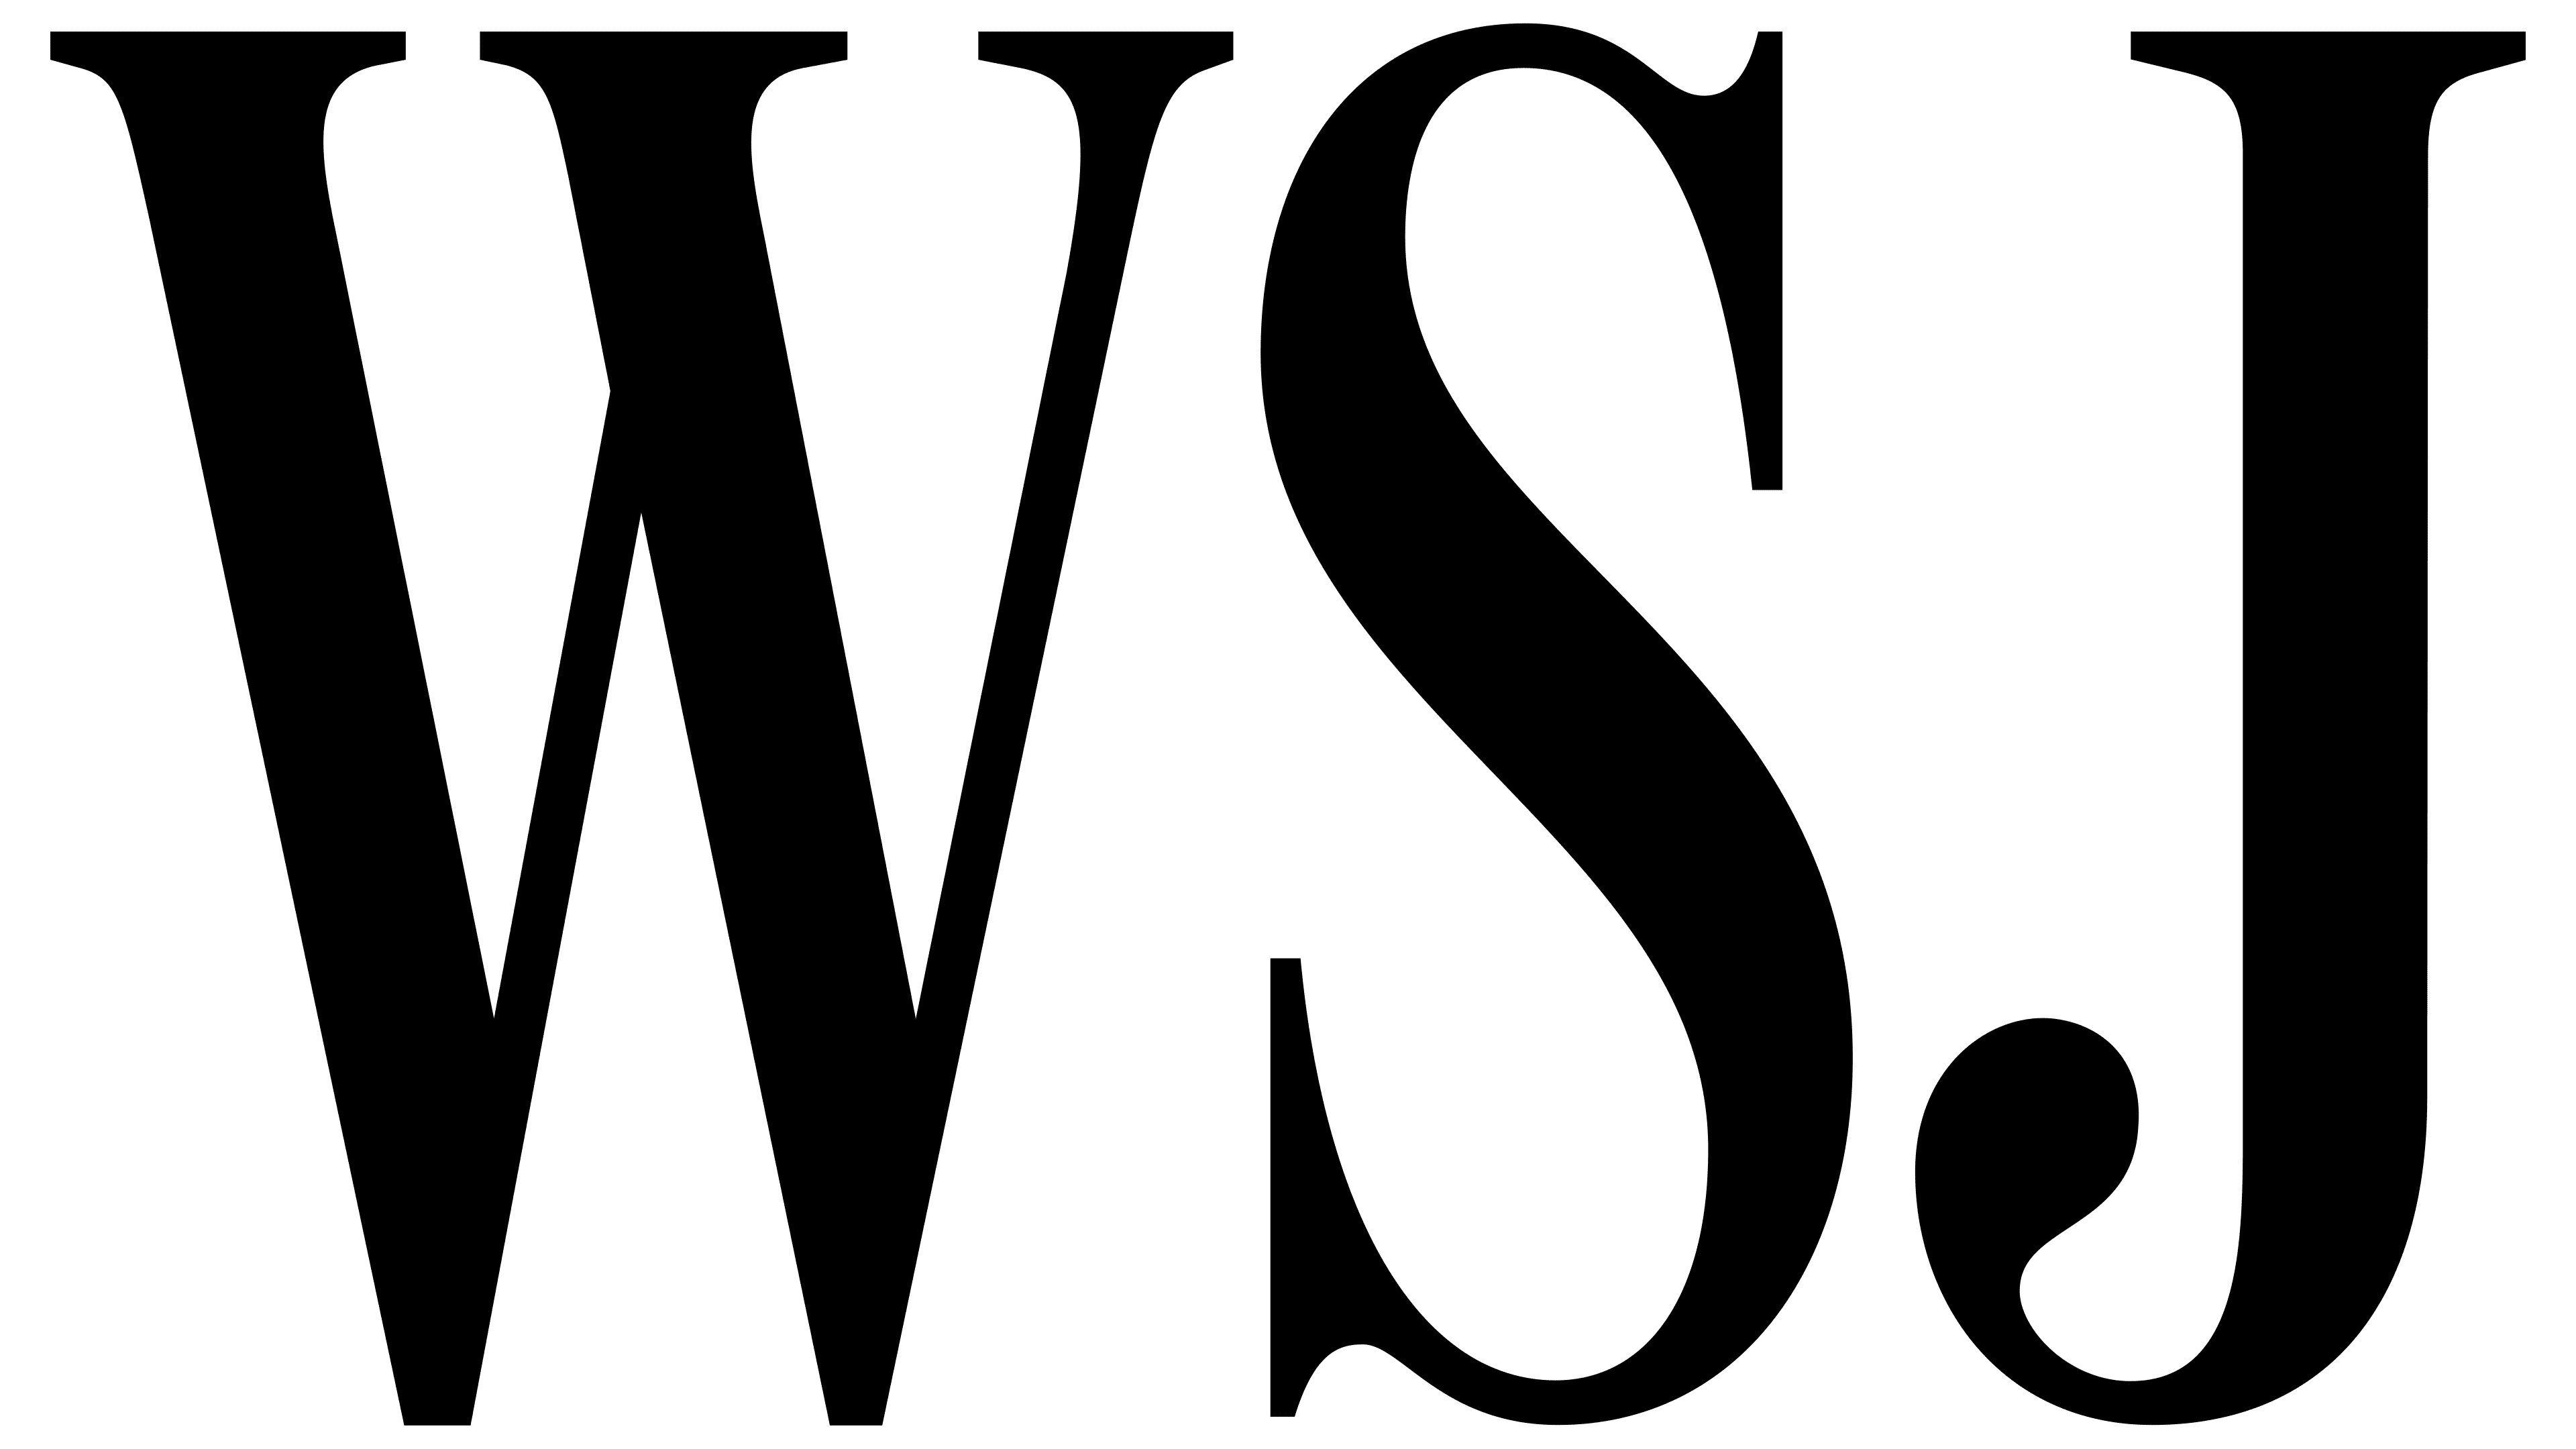 The Wall Street Journal Symbol